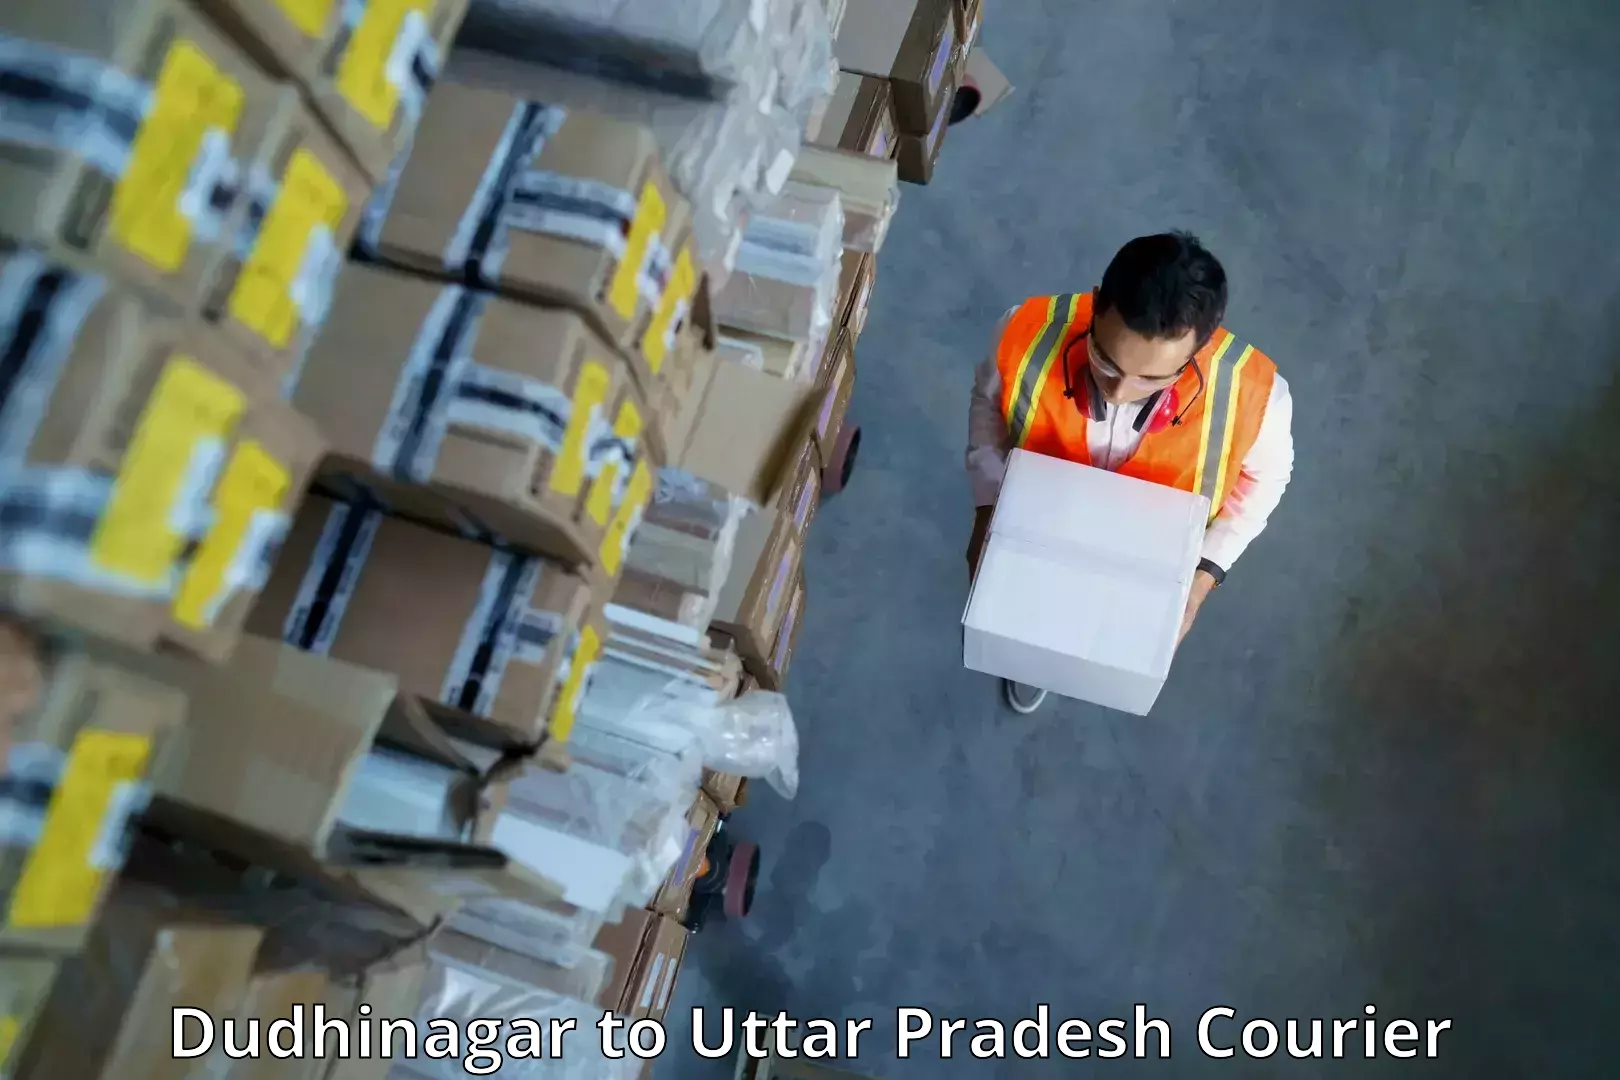 Efficient cargo handling Dudhinagar to Farrukhabad